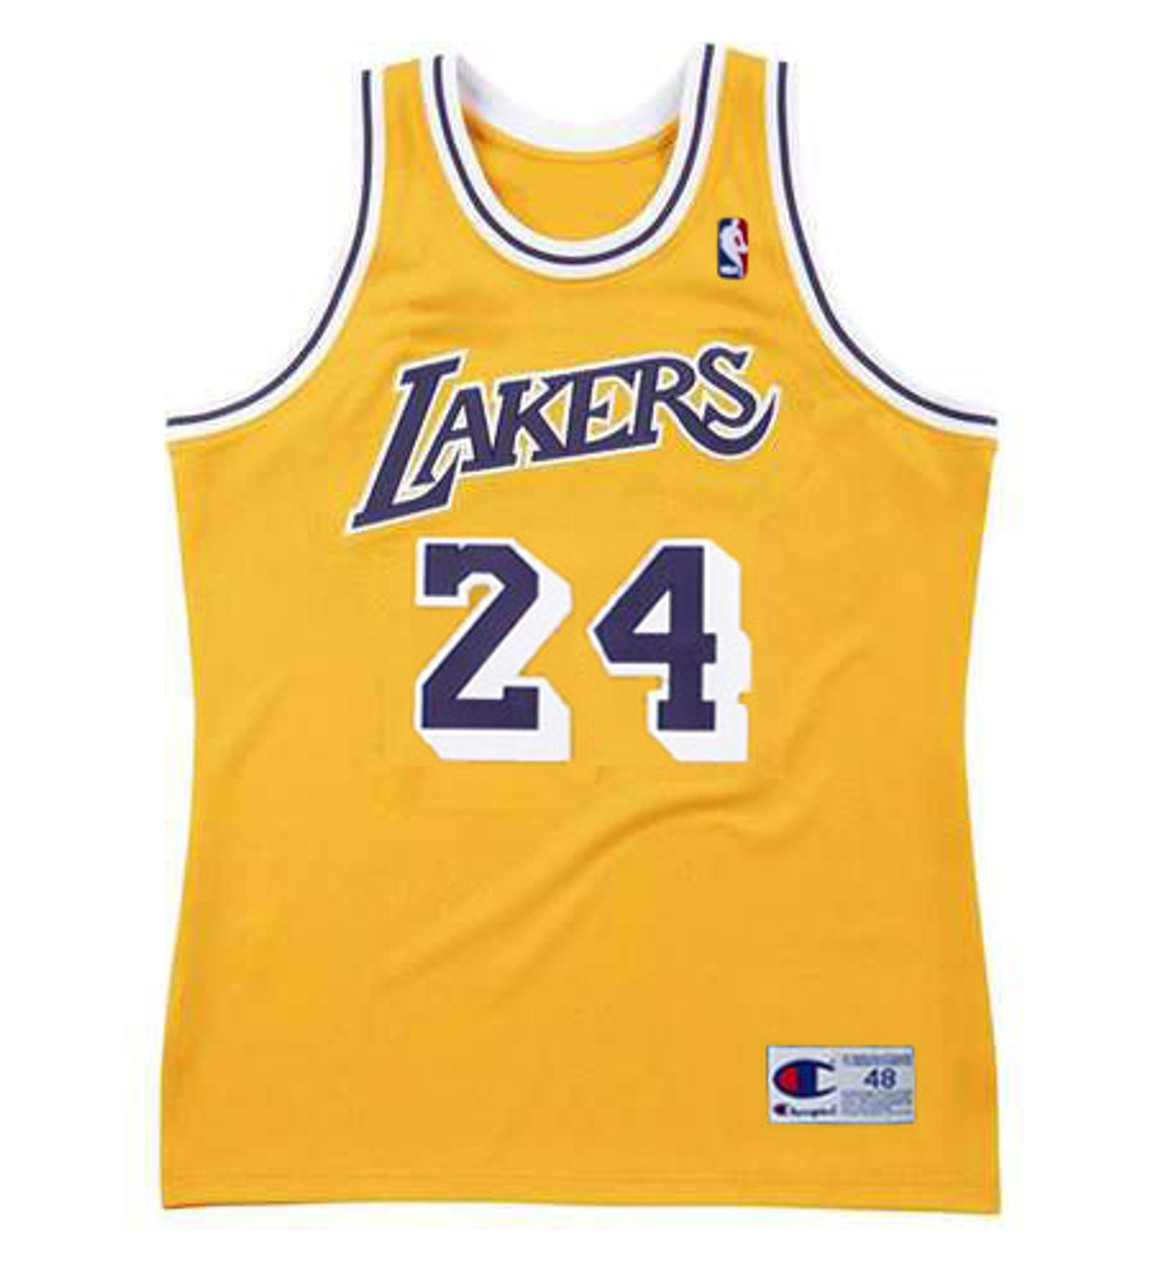 KOBE BRYANT  Los Angeles Lakers 2004 Throwback NBA Basketball Jersey